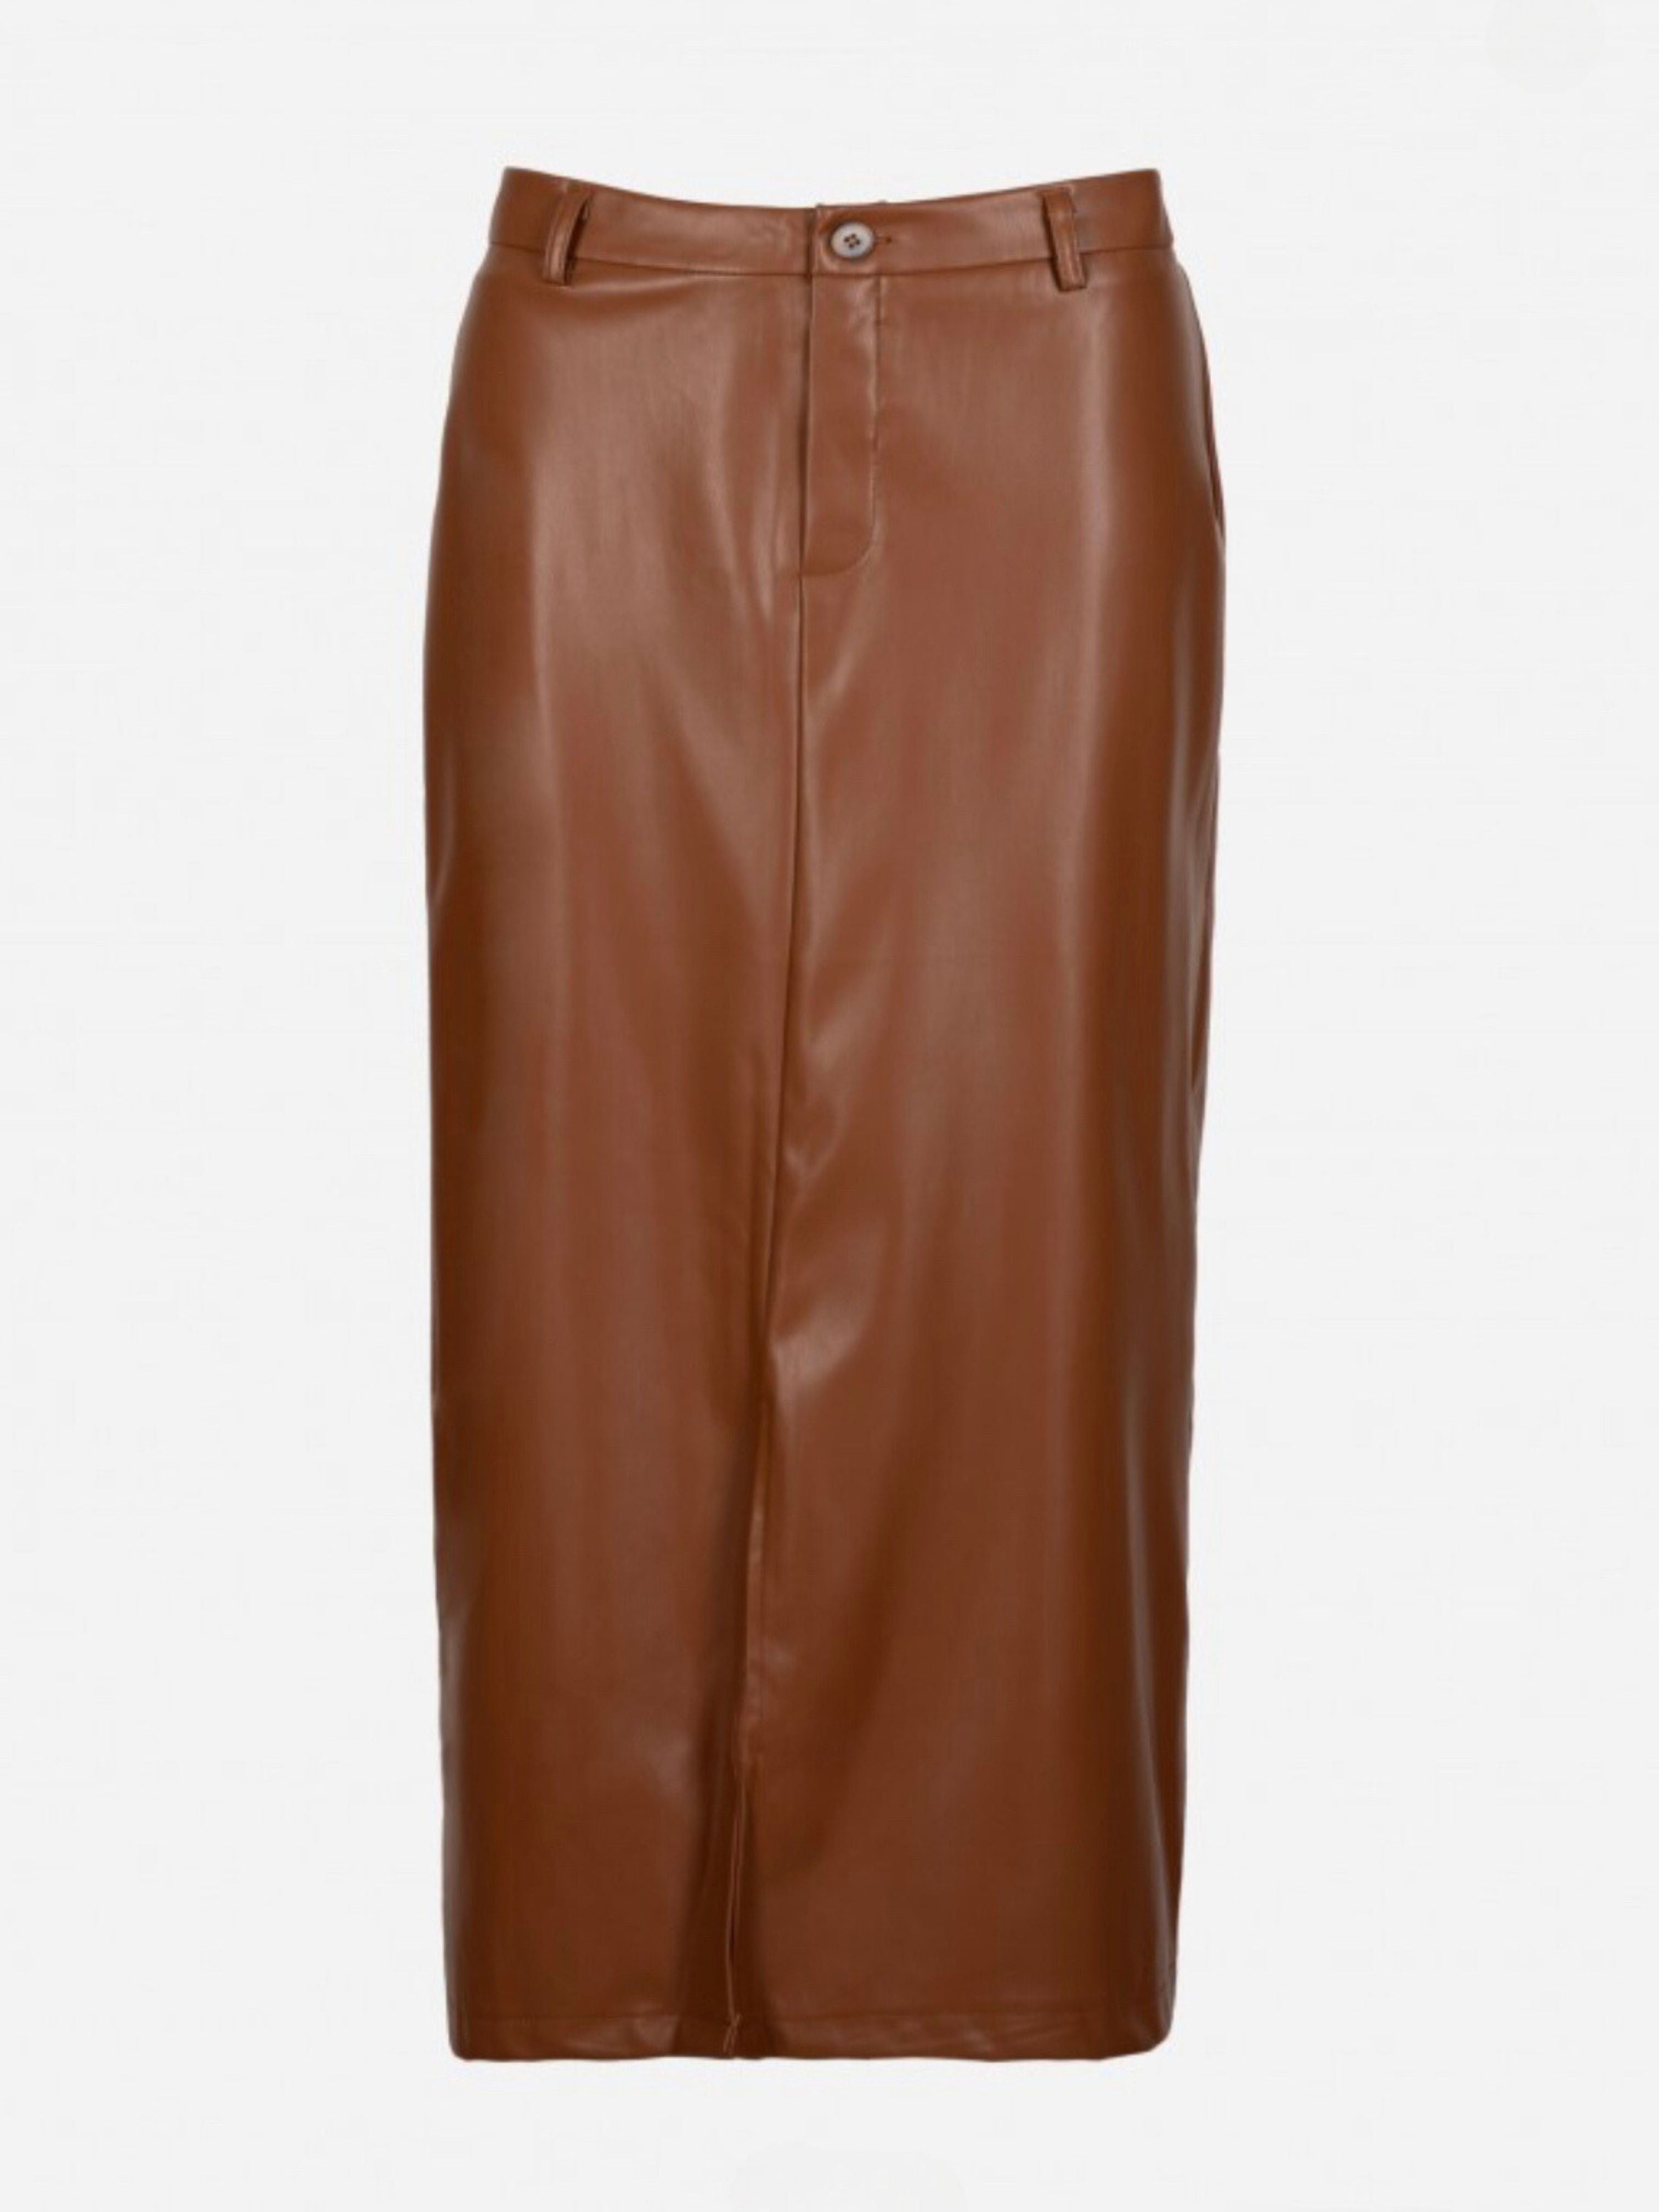 julina caramel leather midi skirt